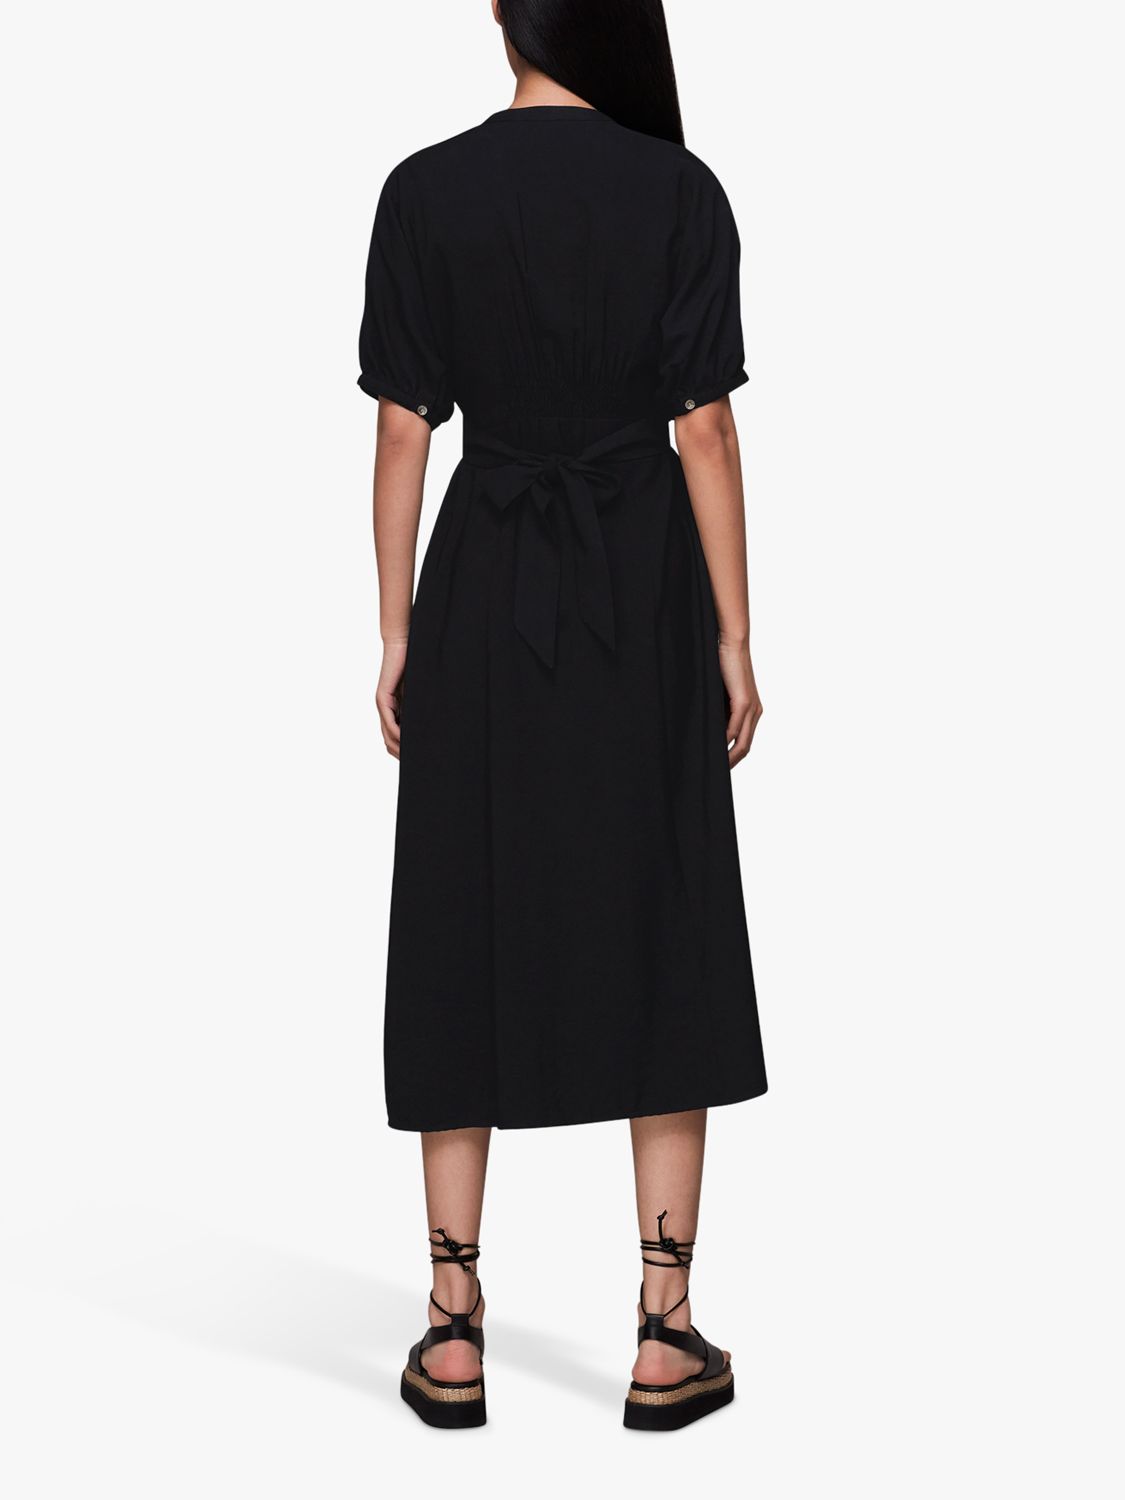 Whistles Amber Midi Dress, Black at John Lewis & Partners